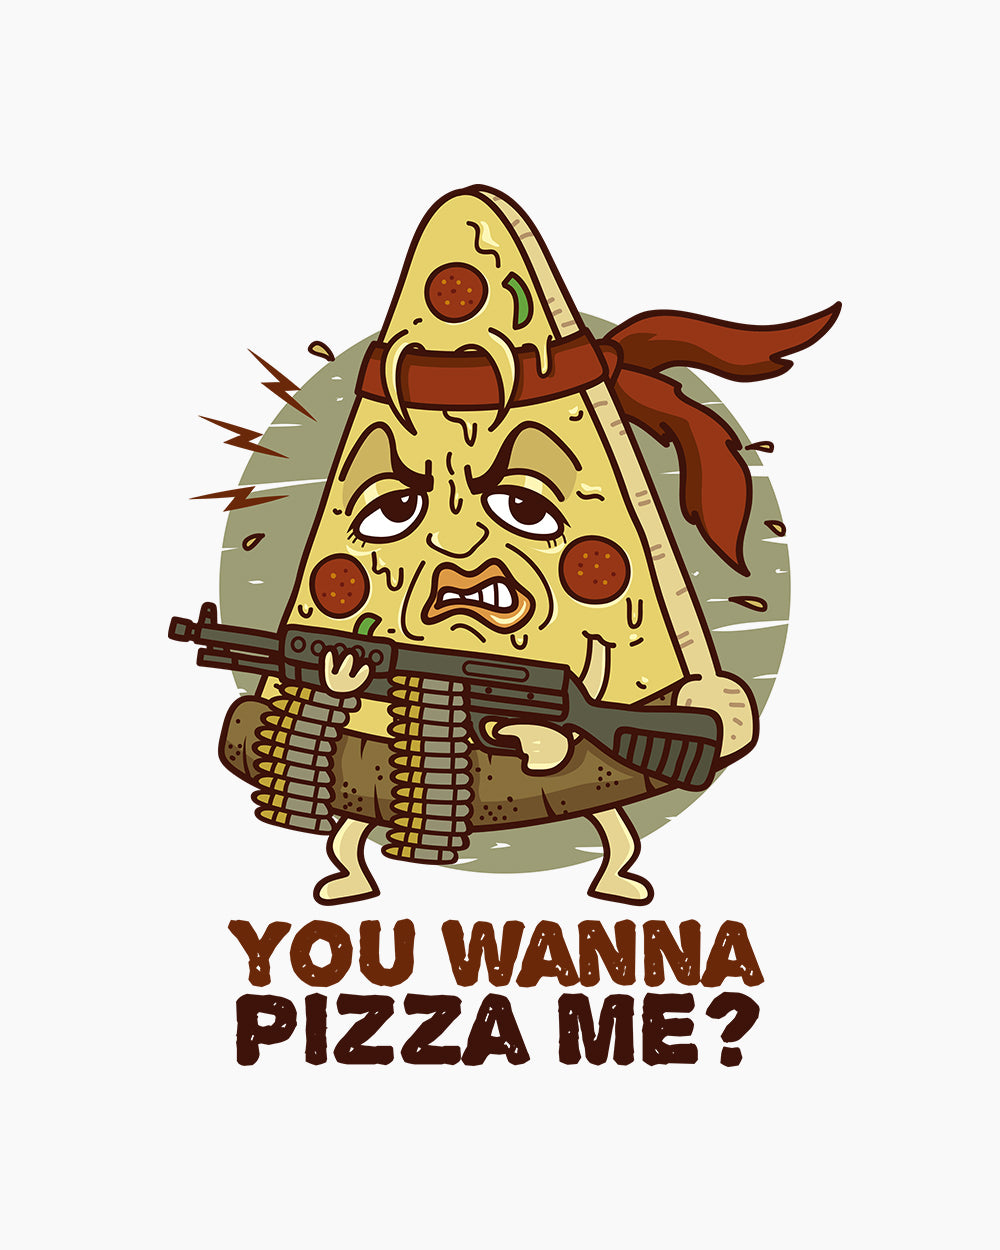 You Wanna Pizza Me Long Sleeve Australia Online #colour_white